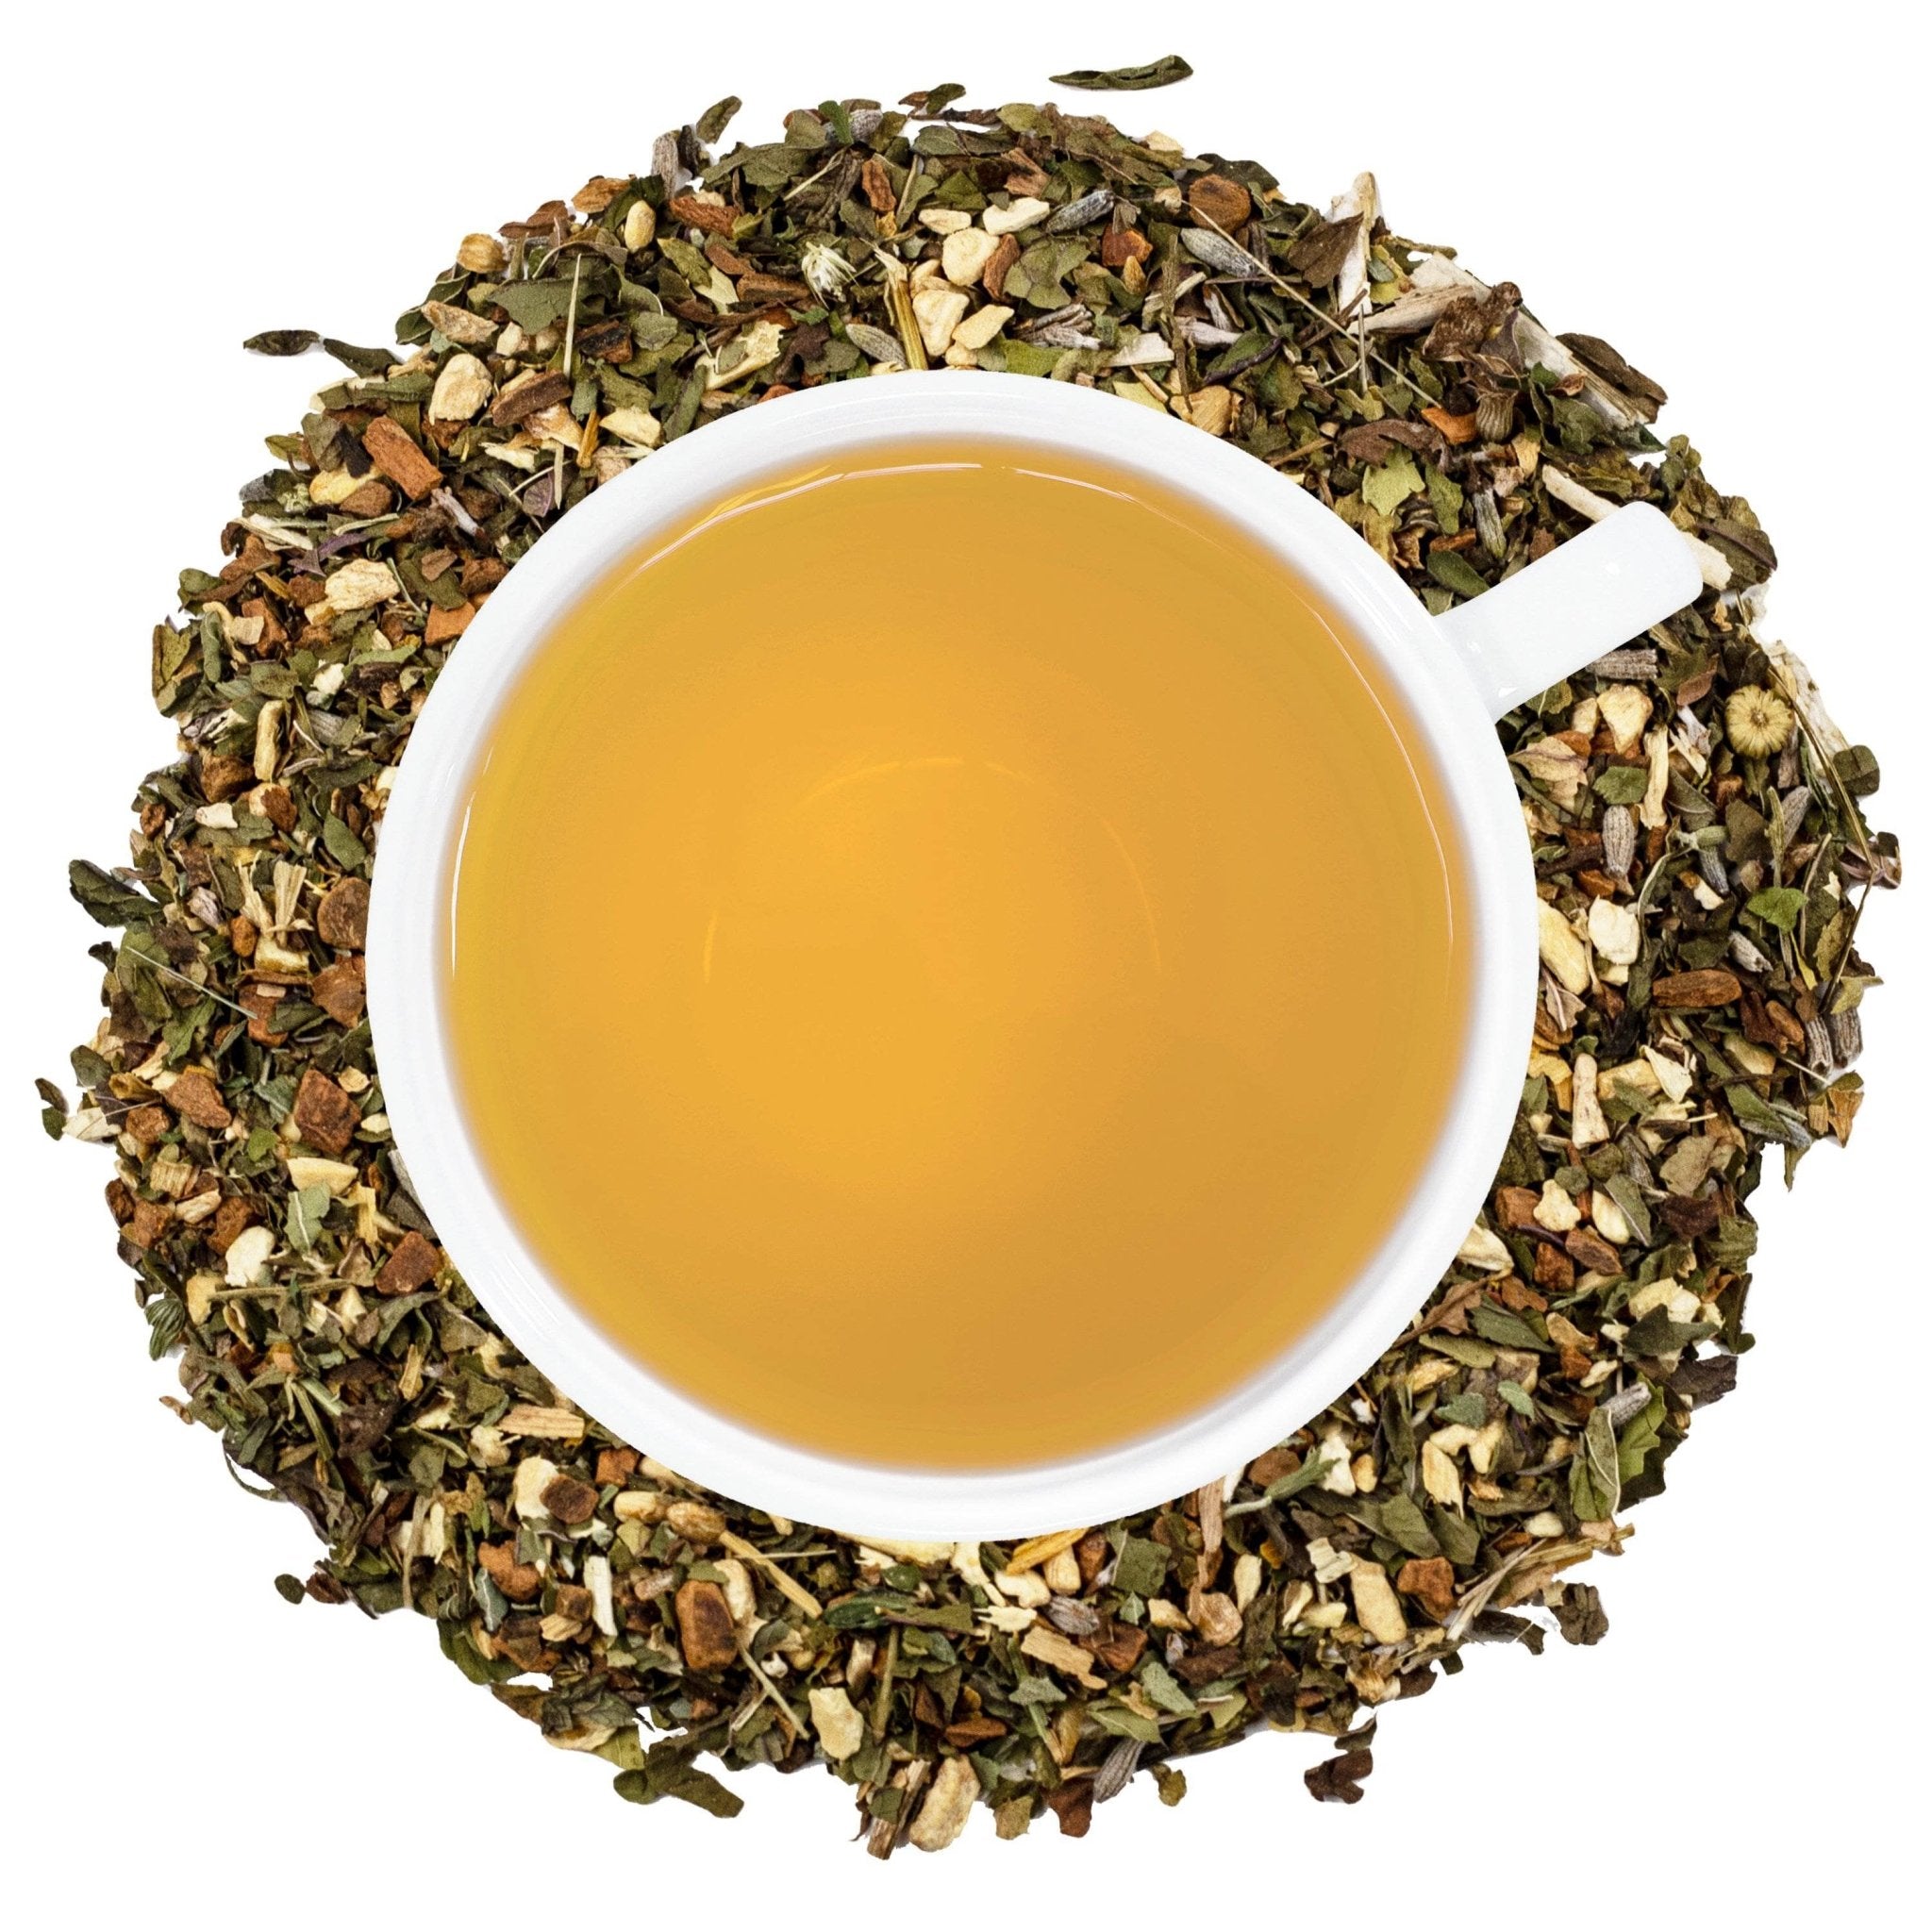 Organic Hangover Relief Tea